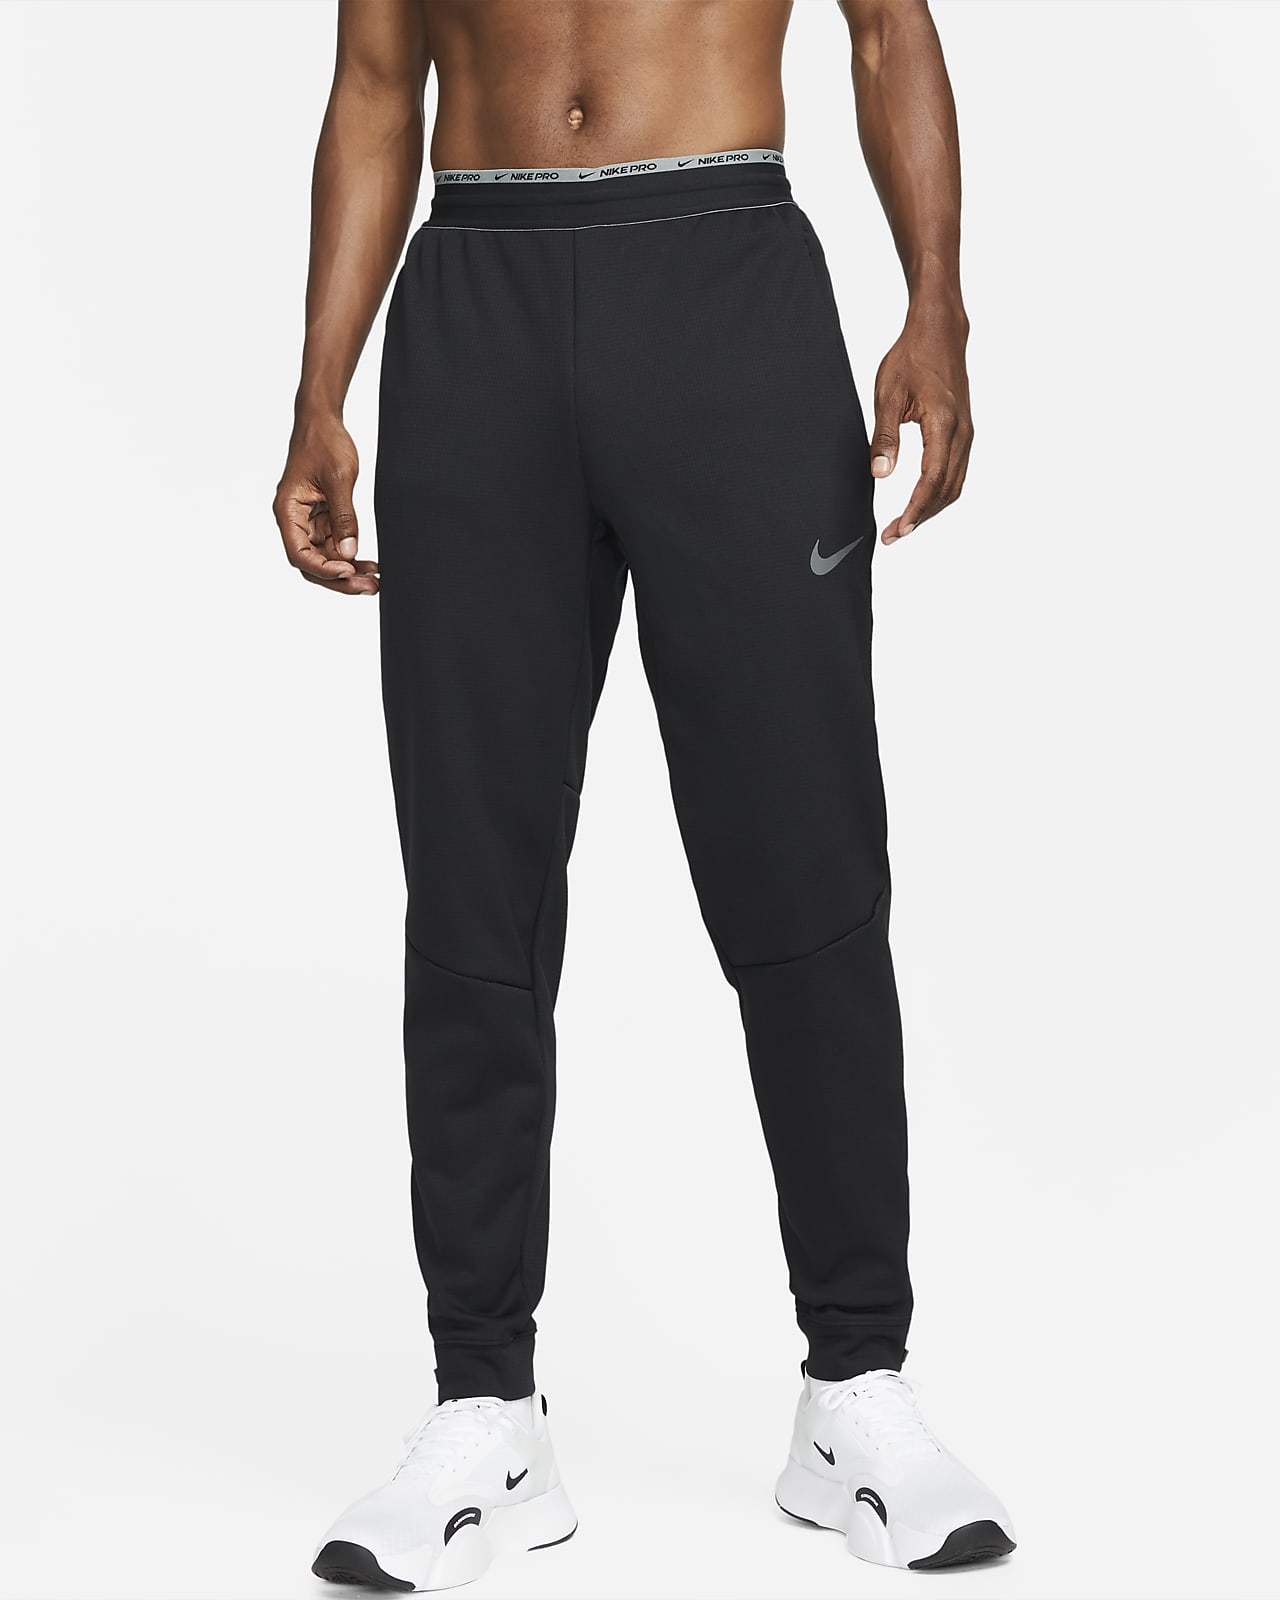 Pants de fitness Therma-FIT para Therma Nike.com